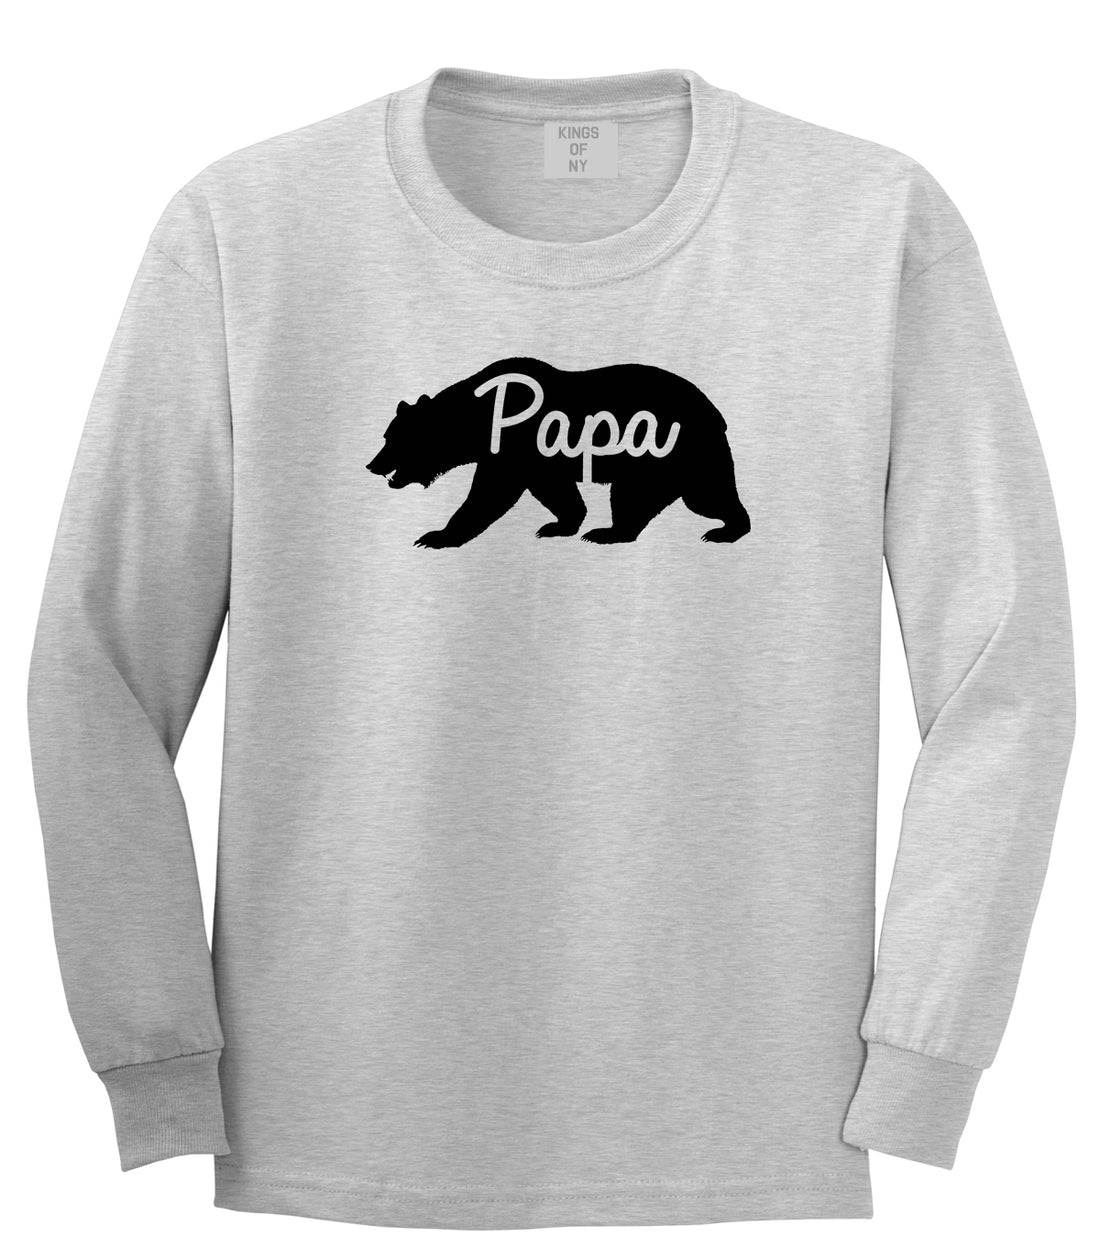 Papa Bear Mens Long Sleeve T-Shirt Grey by Kings Of NY